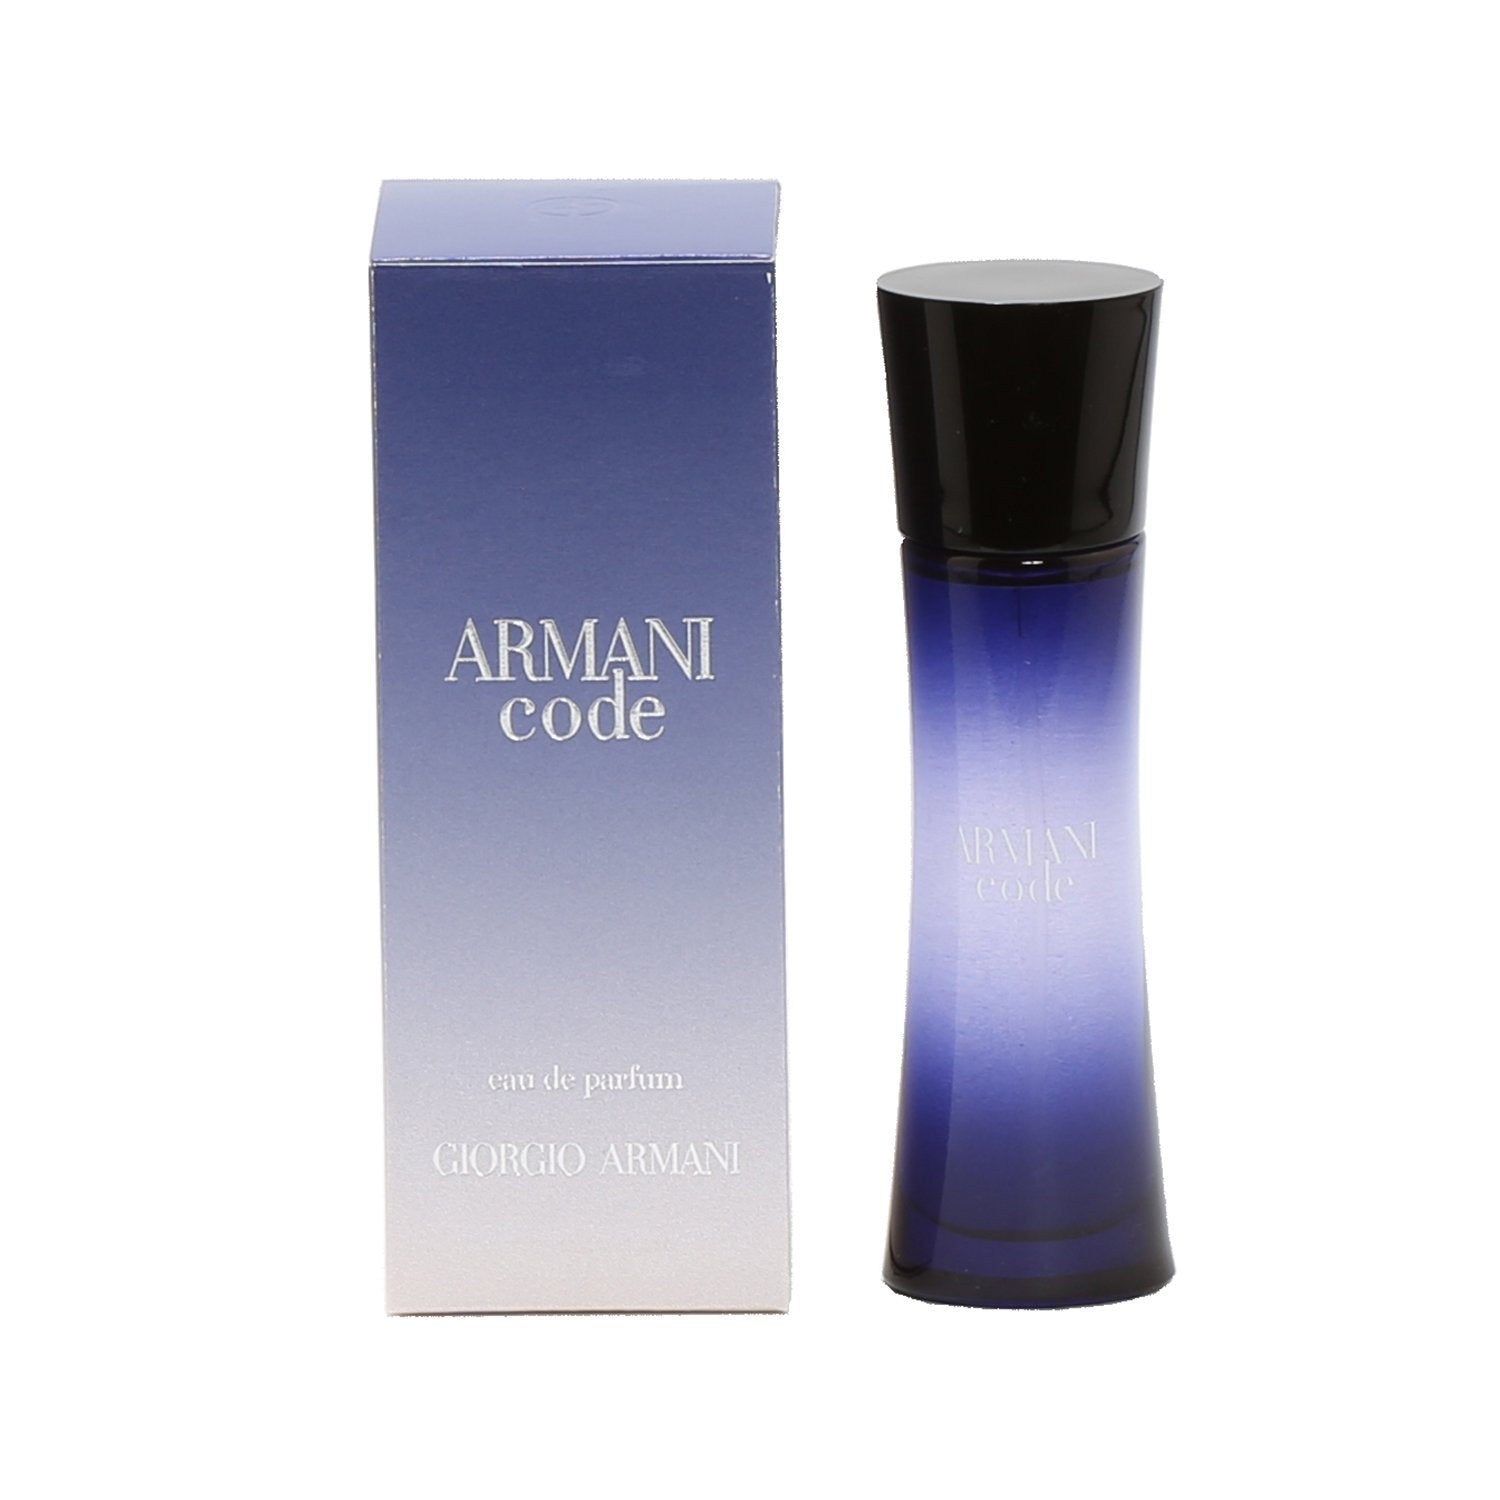 giorgio armani his and hers perfume